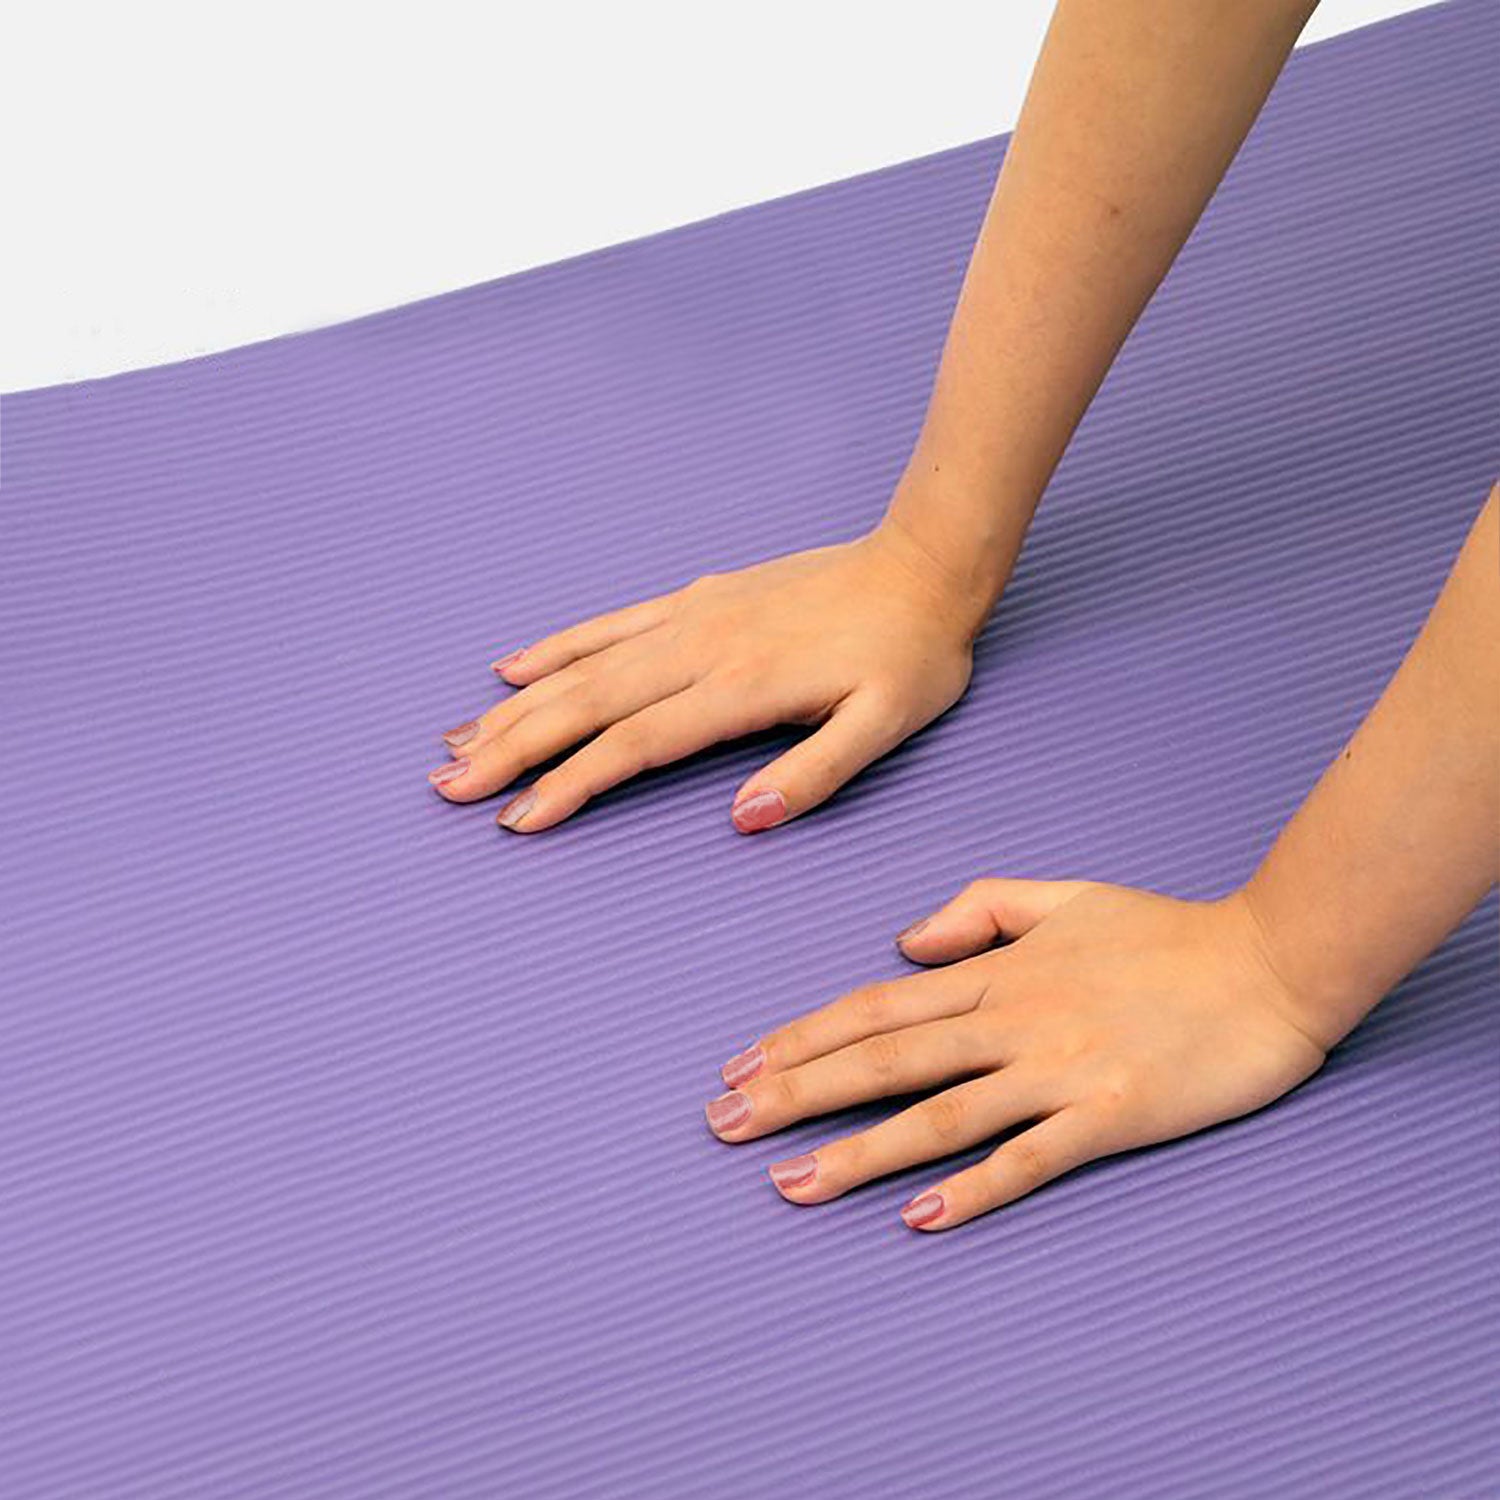 SOBEYO Purple Yoga Mats Extra Thick